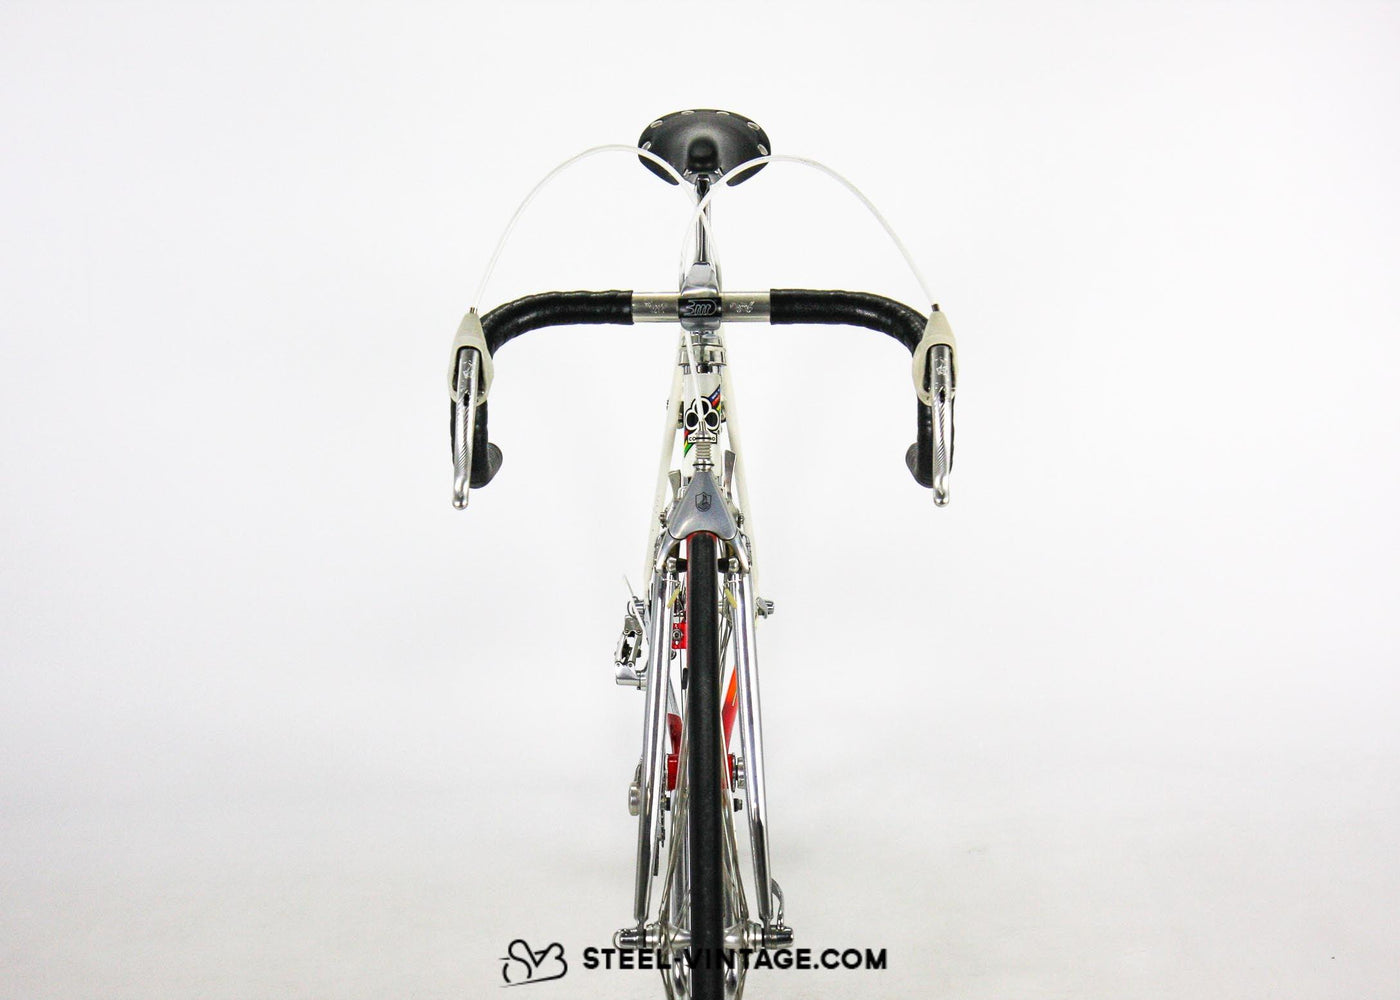 Colnago Master Più Top Class Road Bike 1980s - Steel Vintage Bikes